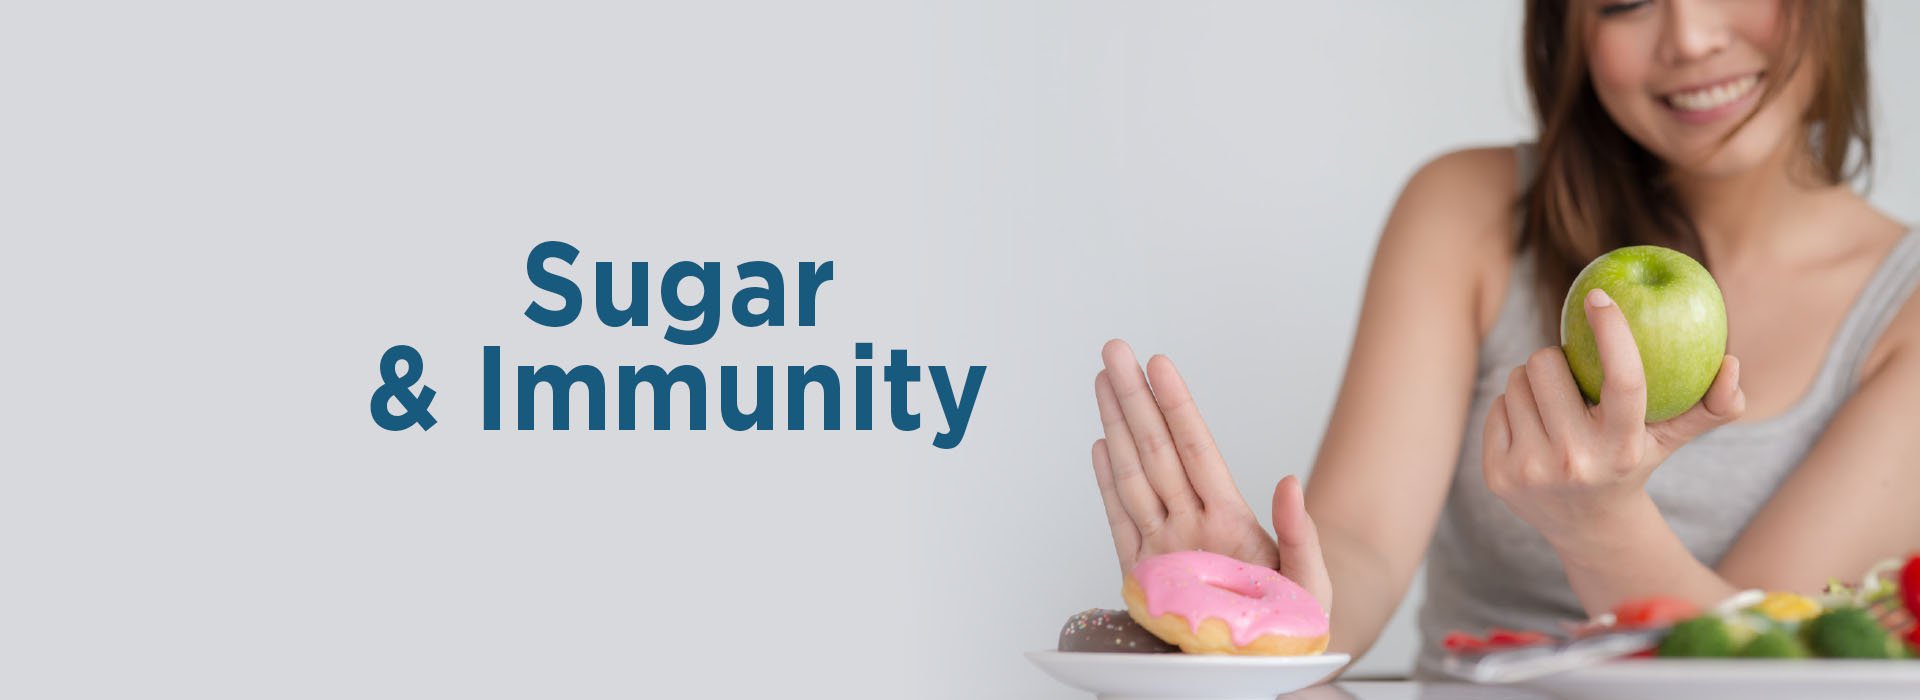 New Image International:Sugar and Imunity